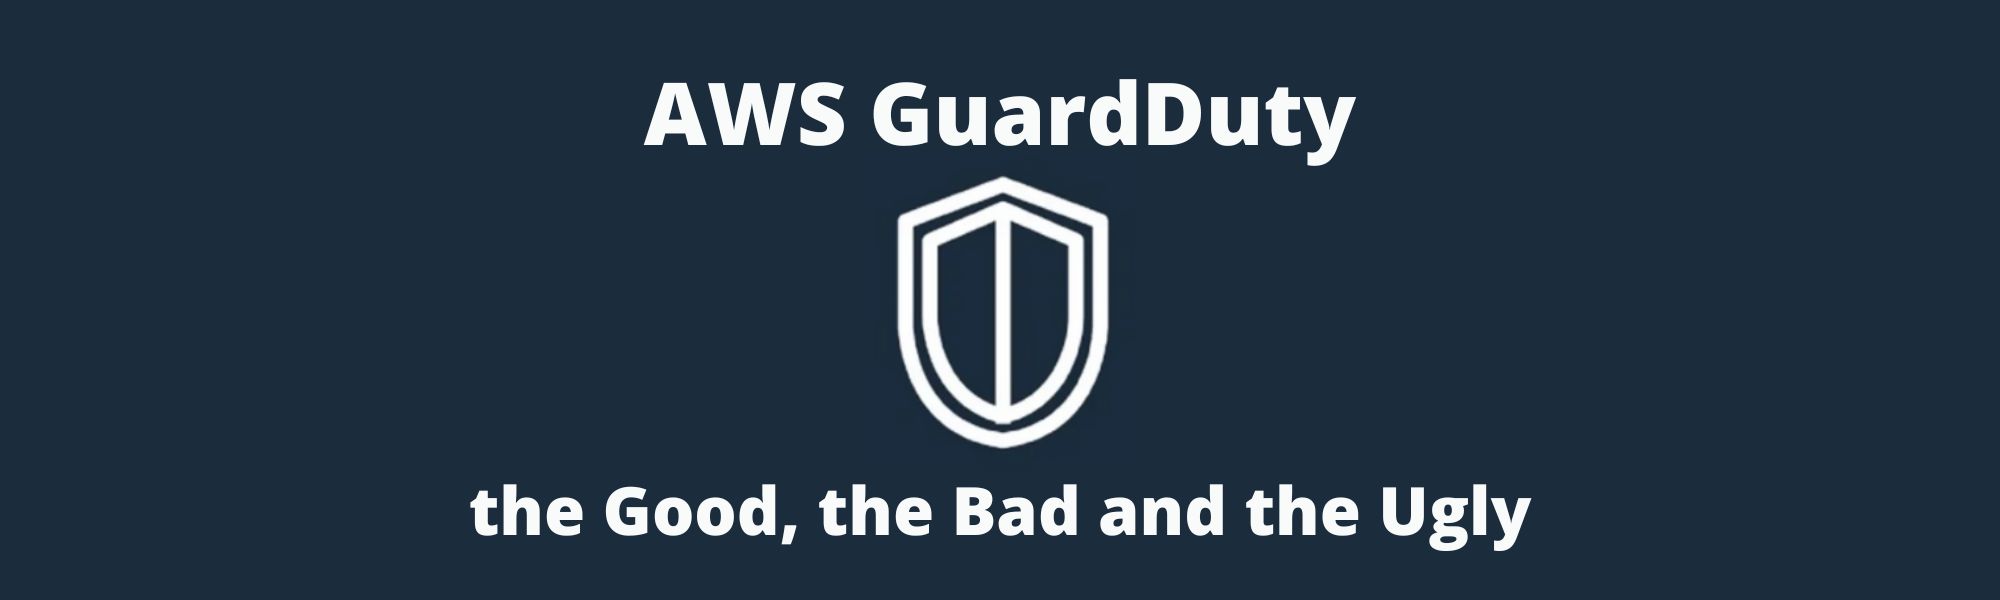 /guardduty-good-bad-ugly/cover-image.jpg